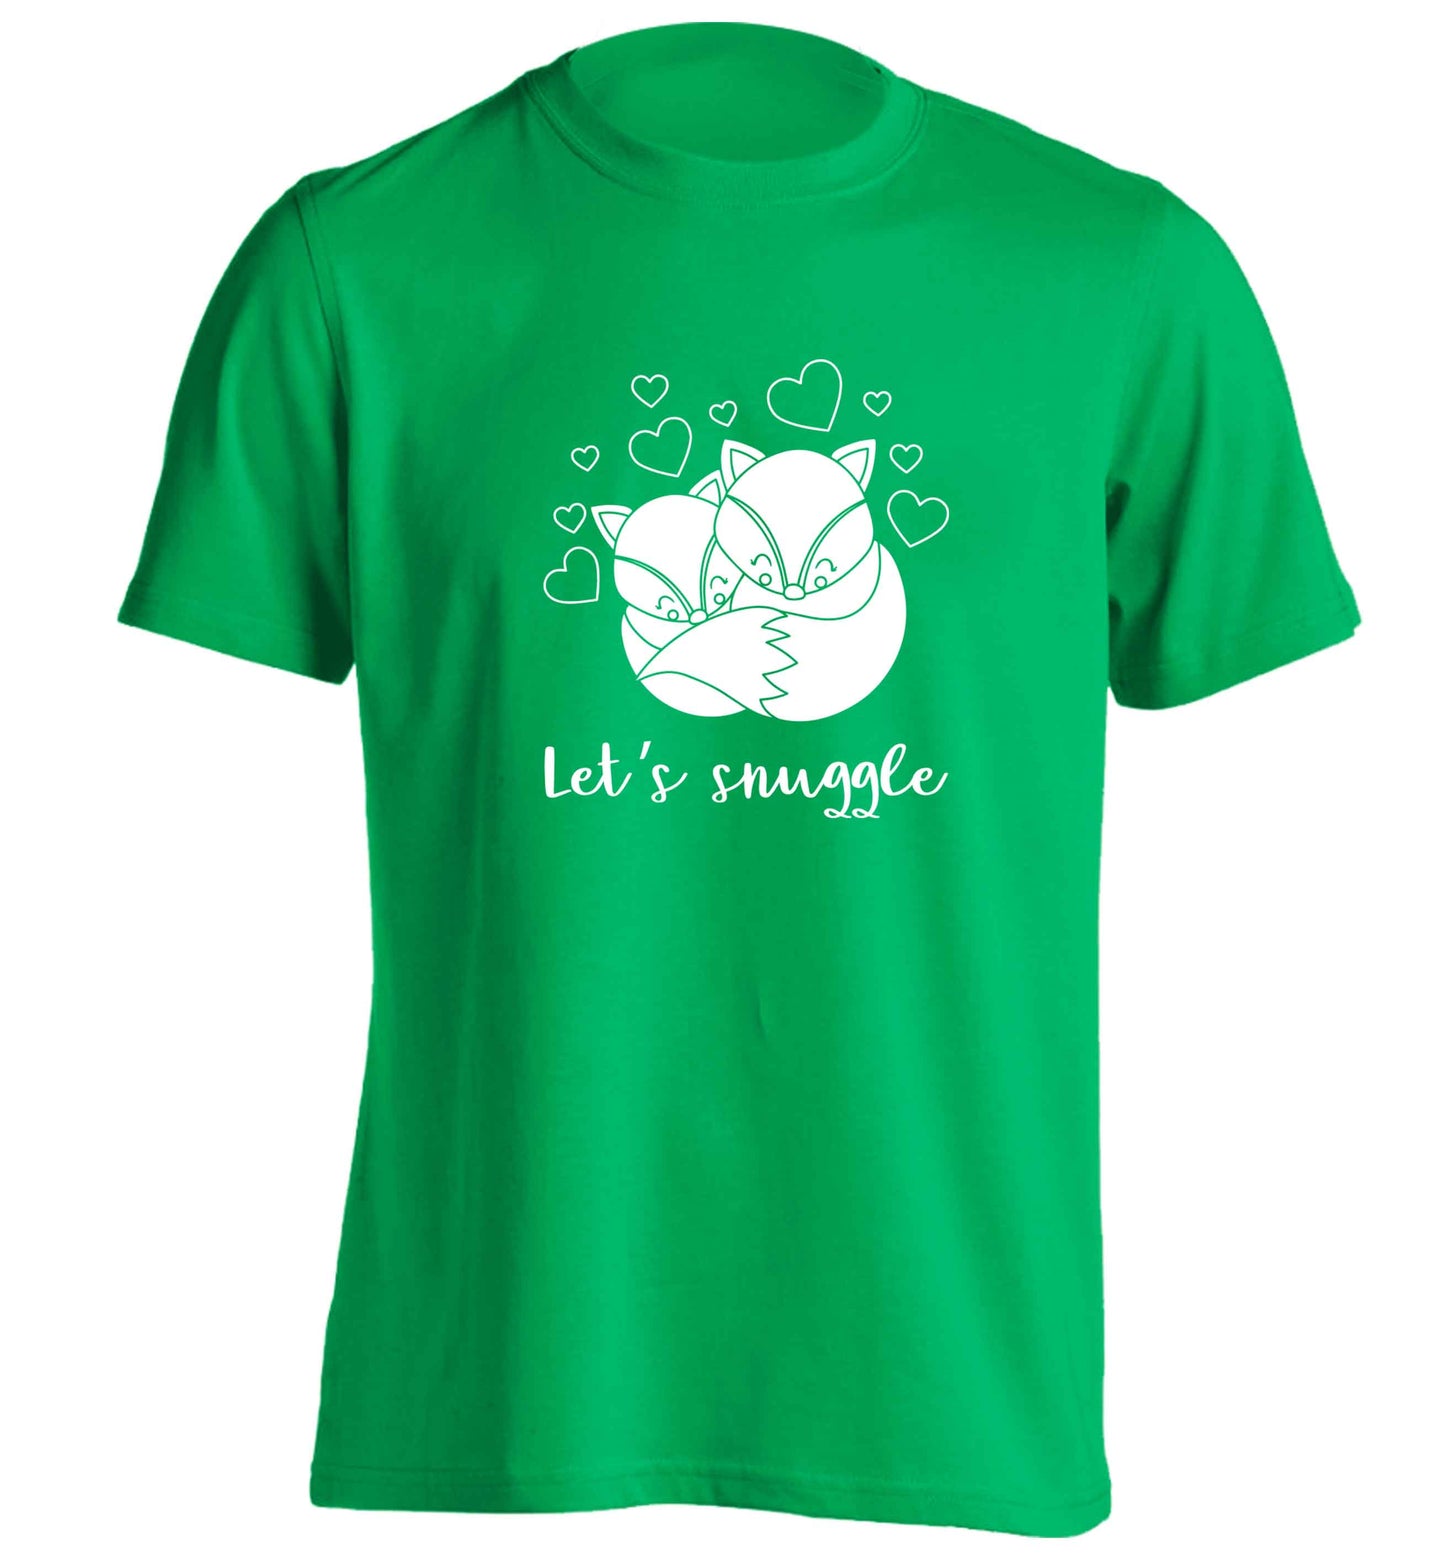 Let's snuggle adults unisex green Tshirt 2XL